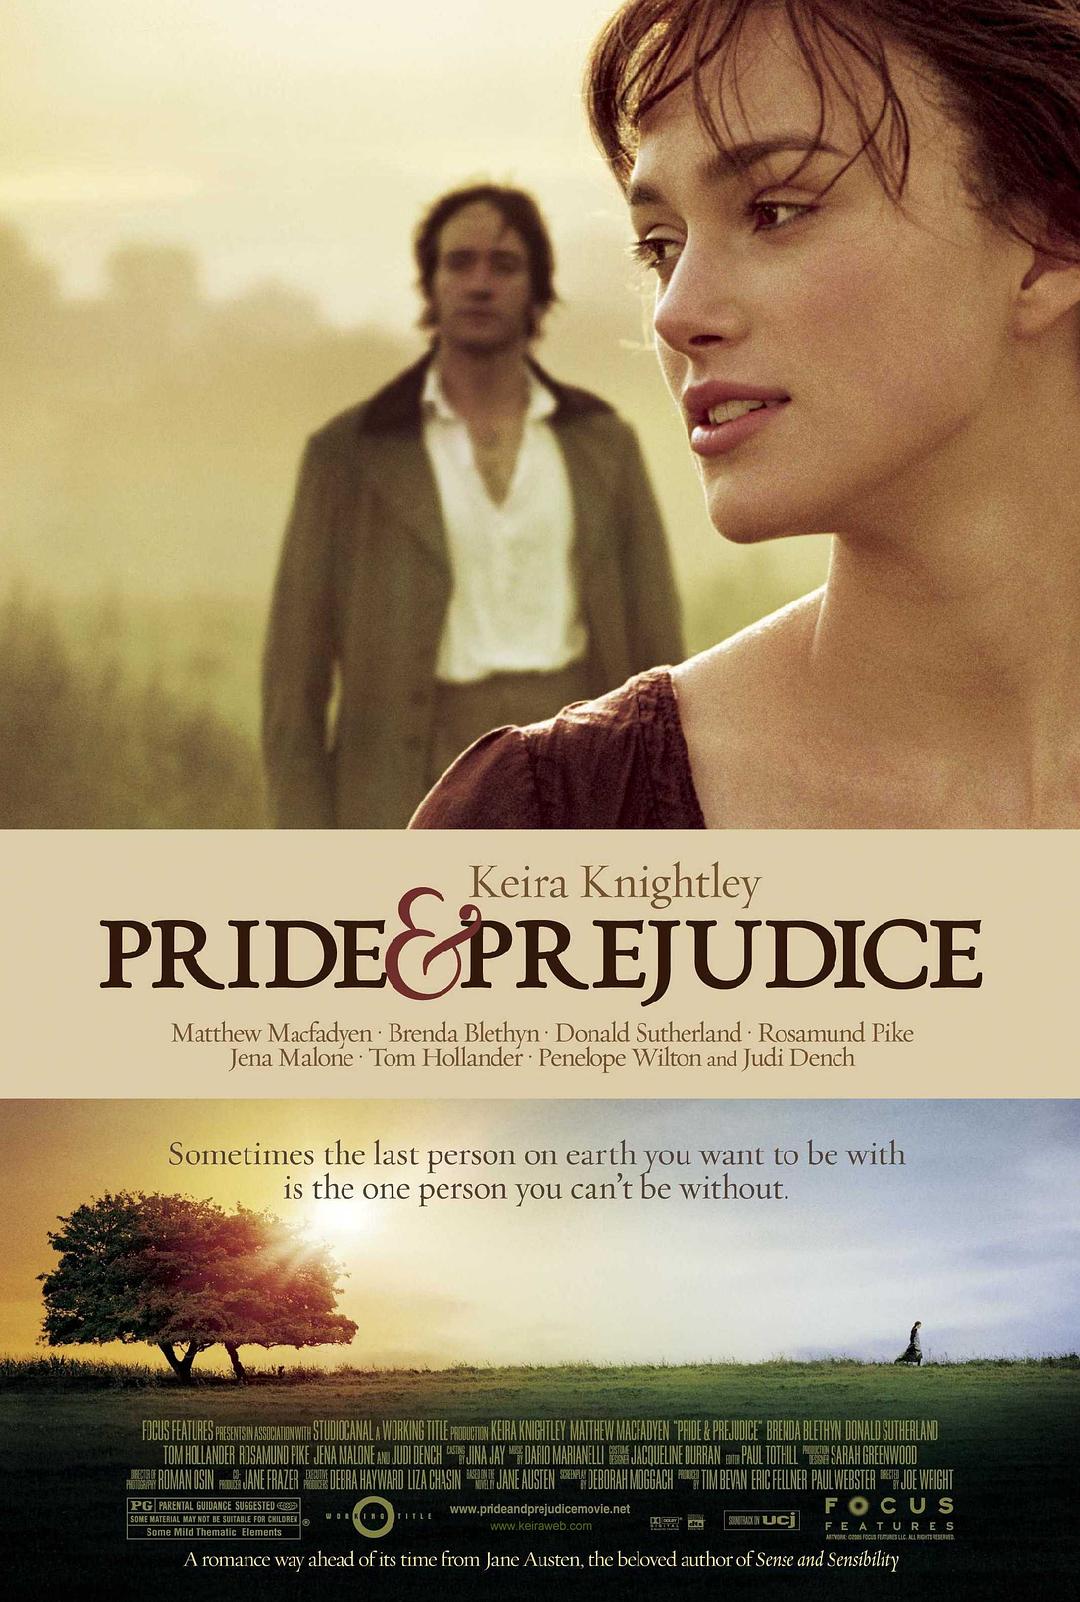 傲慢与偏见[国/英]Pride.And.Prejudice.2005.BluRay.1080p.DTS.2Audio.x264-CHD 12.8GB